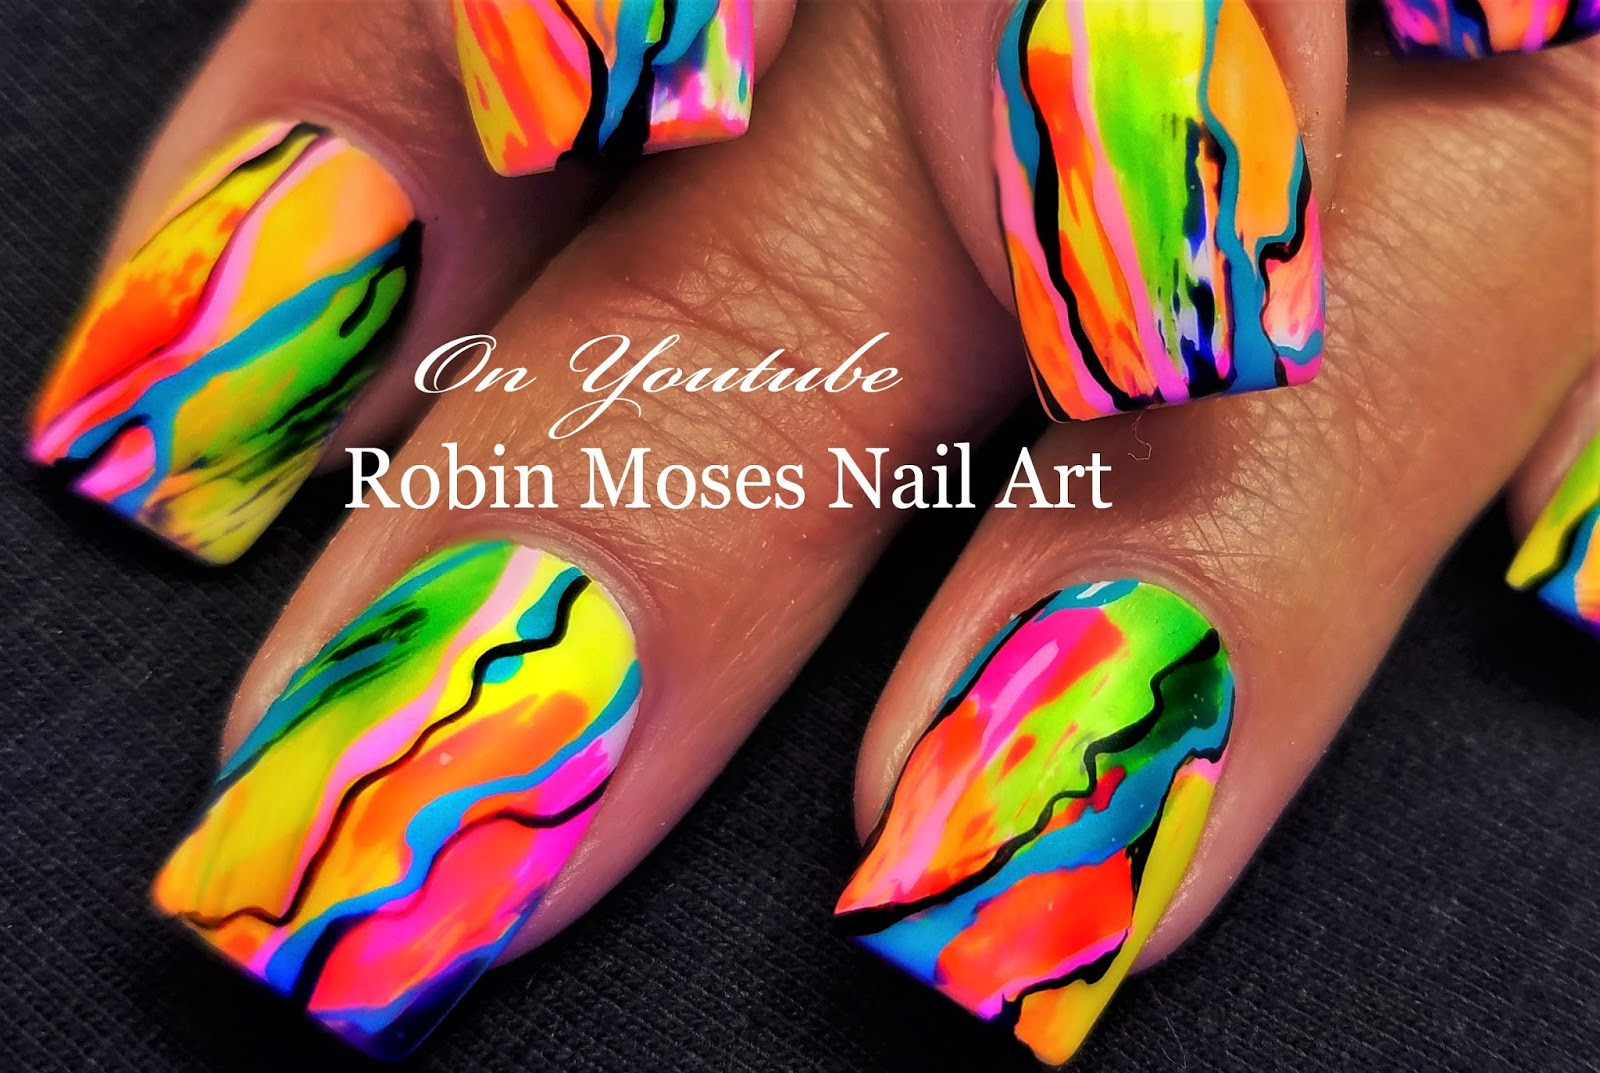 Robin Moses Nail Art Fan Page - Instagram - wide 4